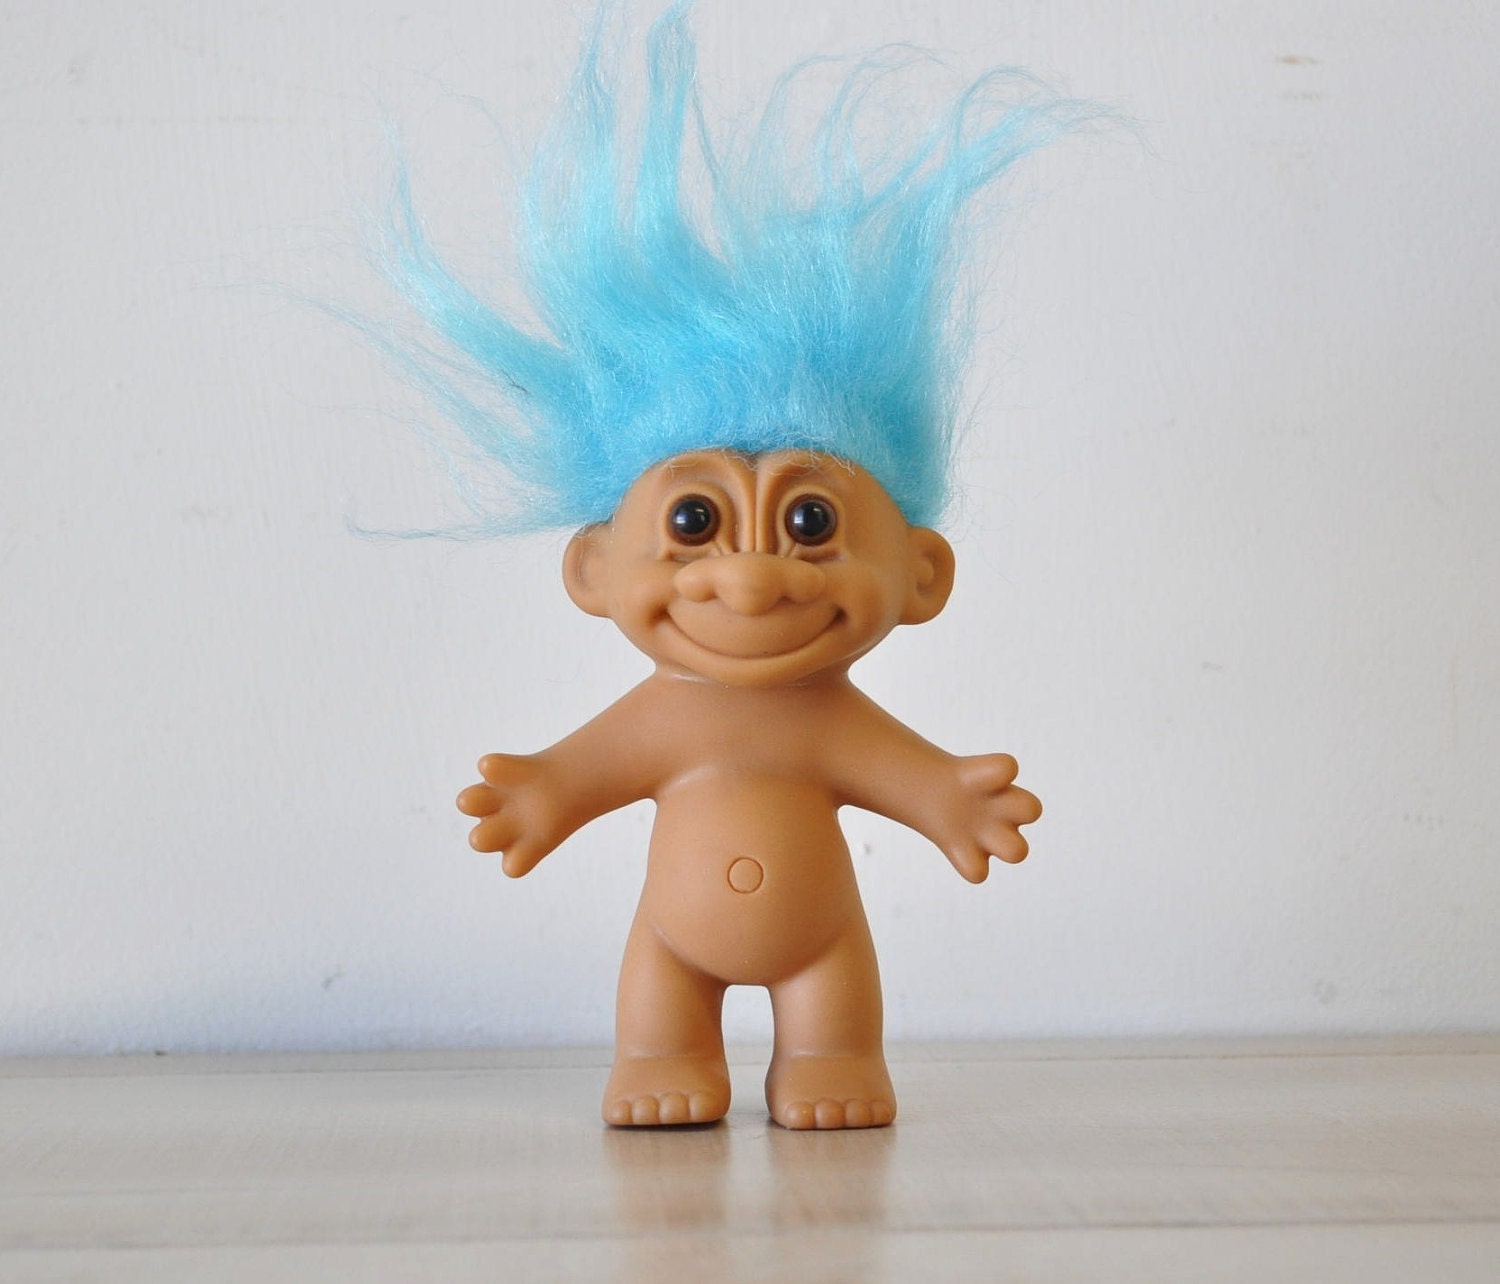 Trolls Troll doll - Wikipedia The Colorful History of the Troll Doll Dam Tr...